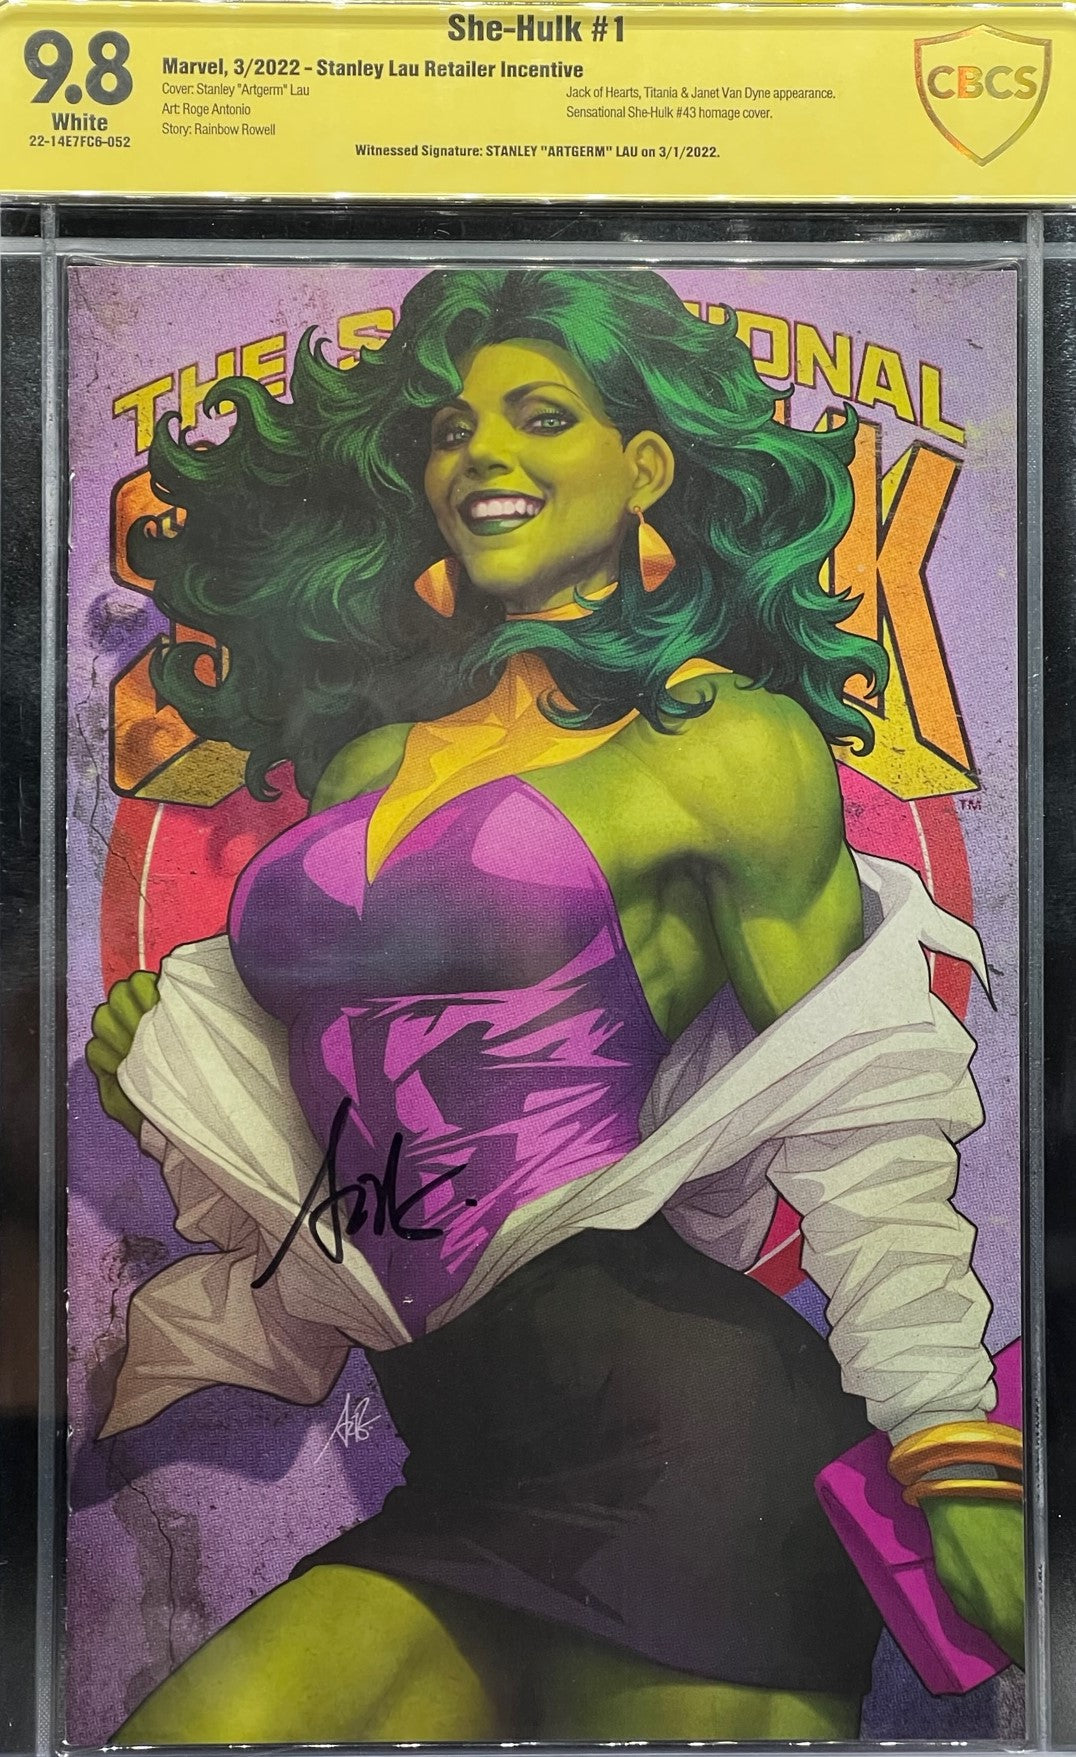 She-Hulk #1 Stanley Lau Retailer Incentive CBCS 9.8 Yellow Label